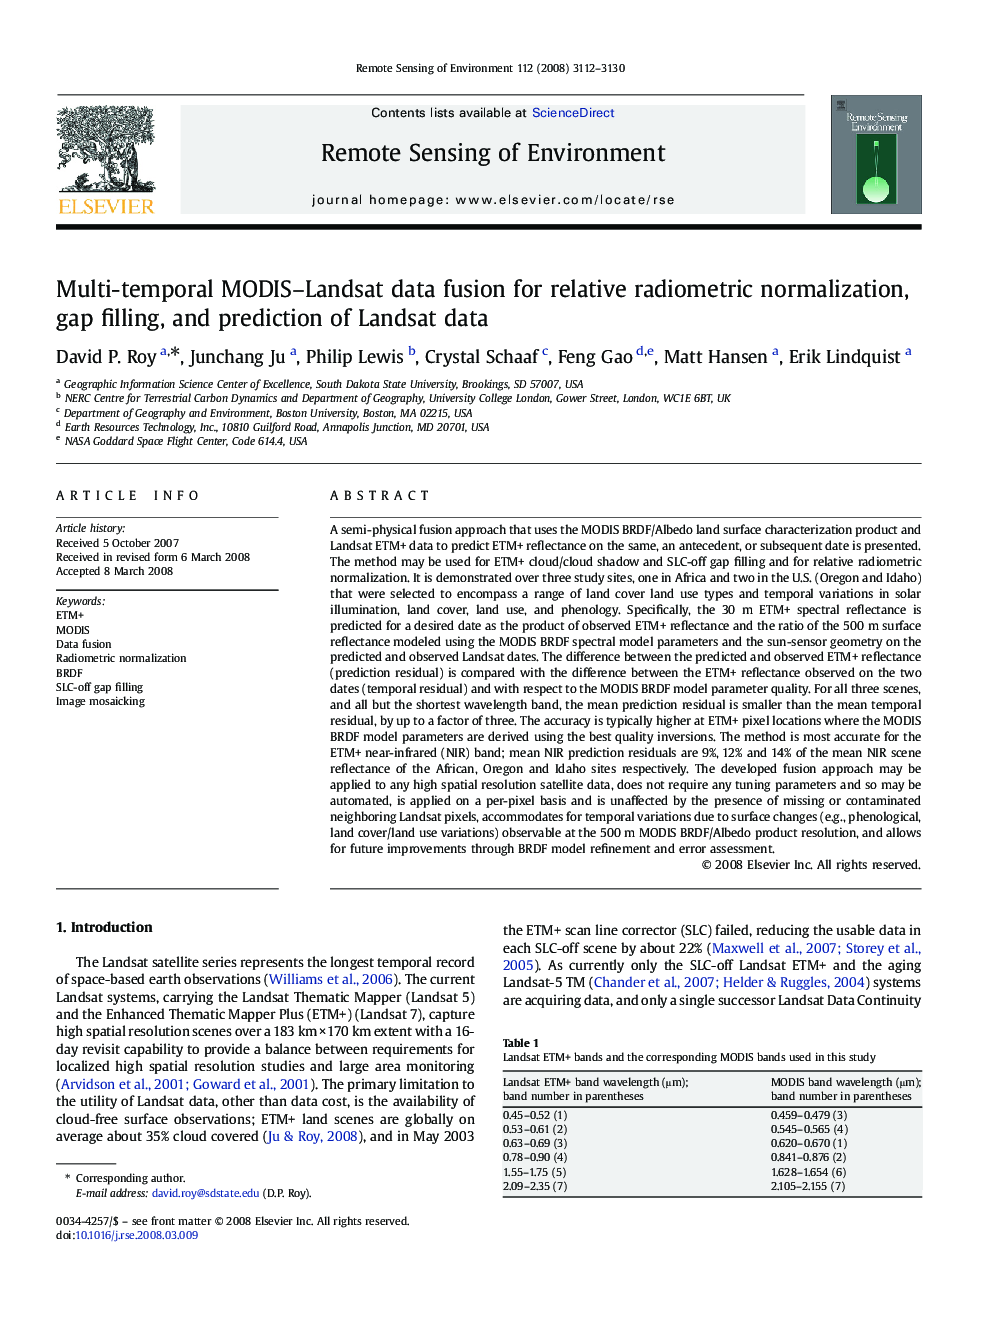 Multi-temporal MODIS–Landsat data fusion for relative radiometric normalization, gap filling, and prediction of Landsat data